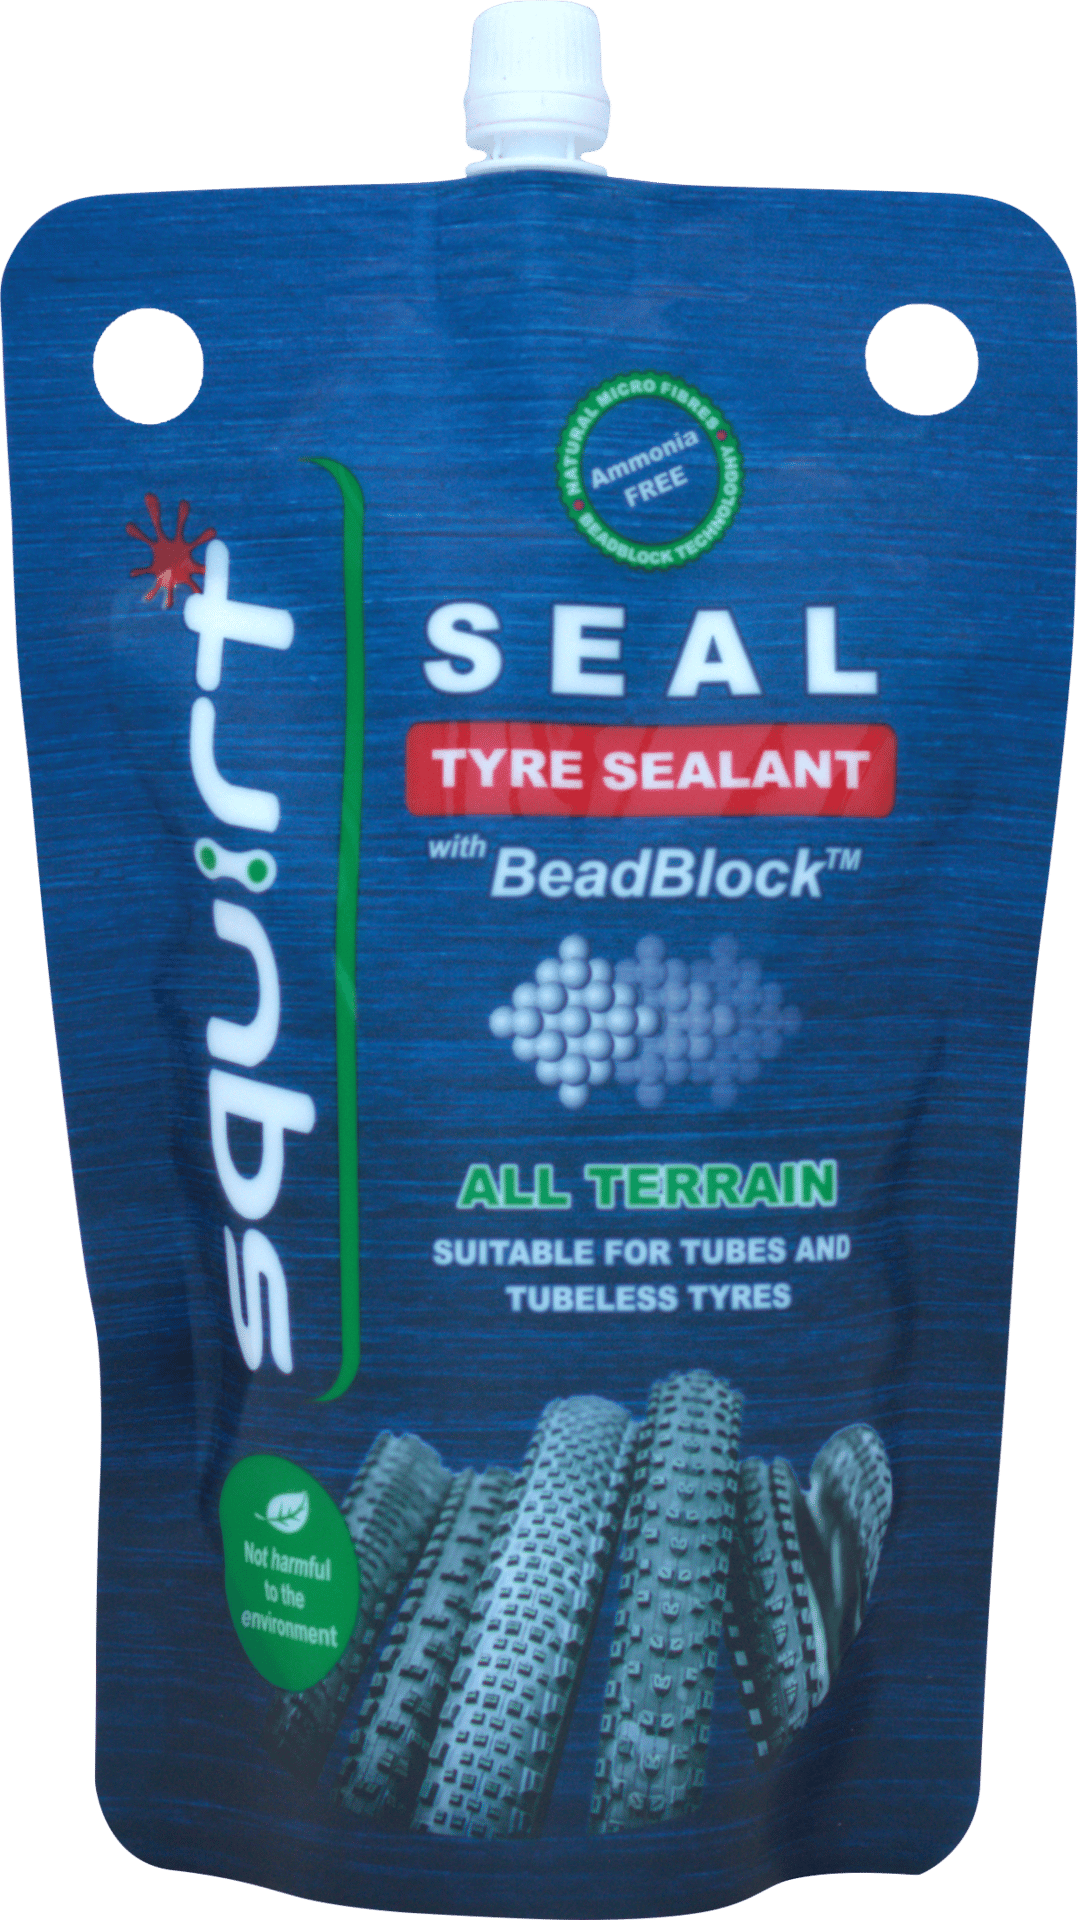 Squirt Easyfill tire sealant